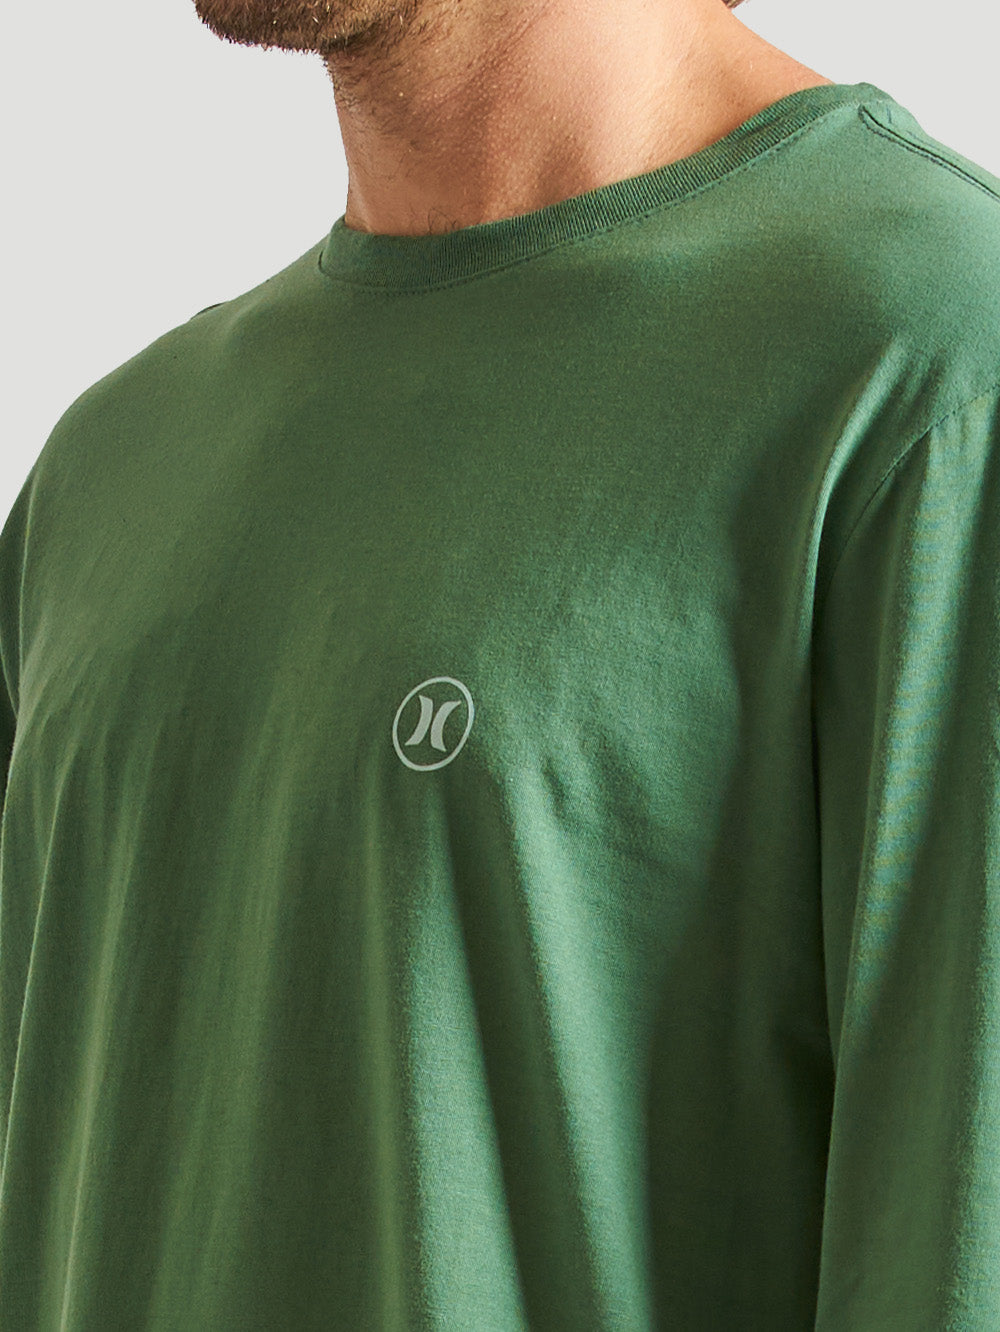 Camiseta Manga Longa Hurley Mini Circle Icon Verde